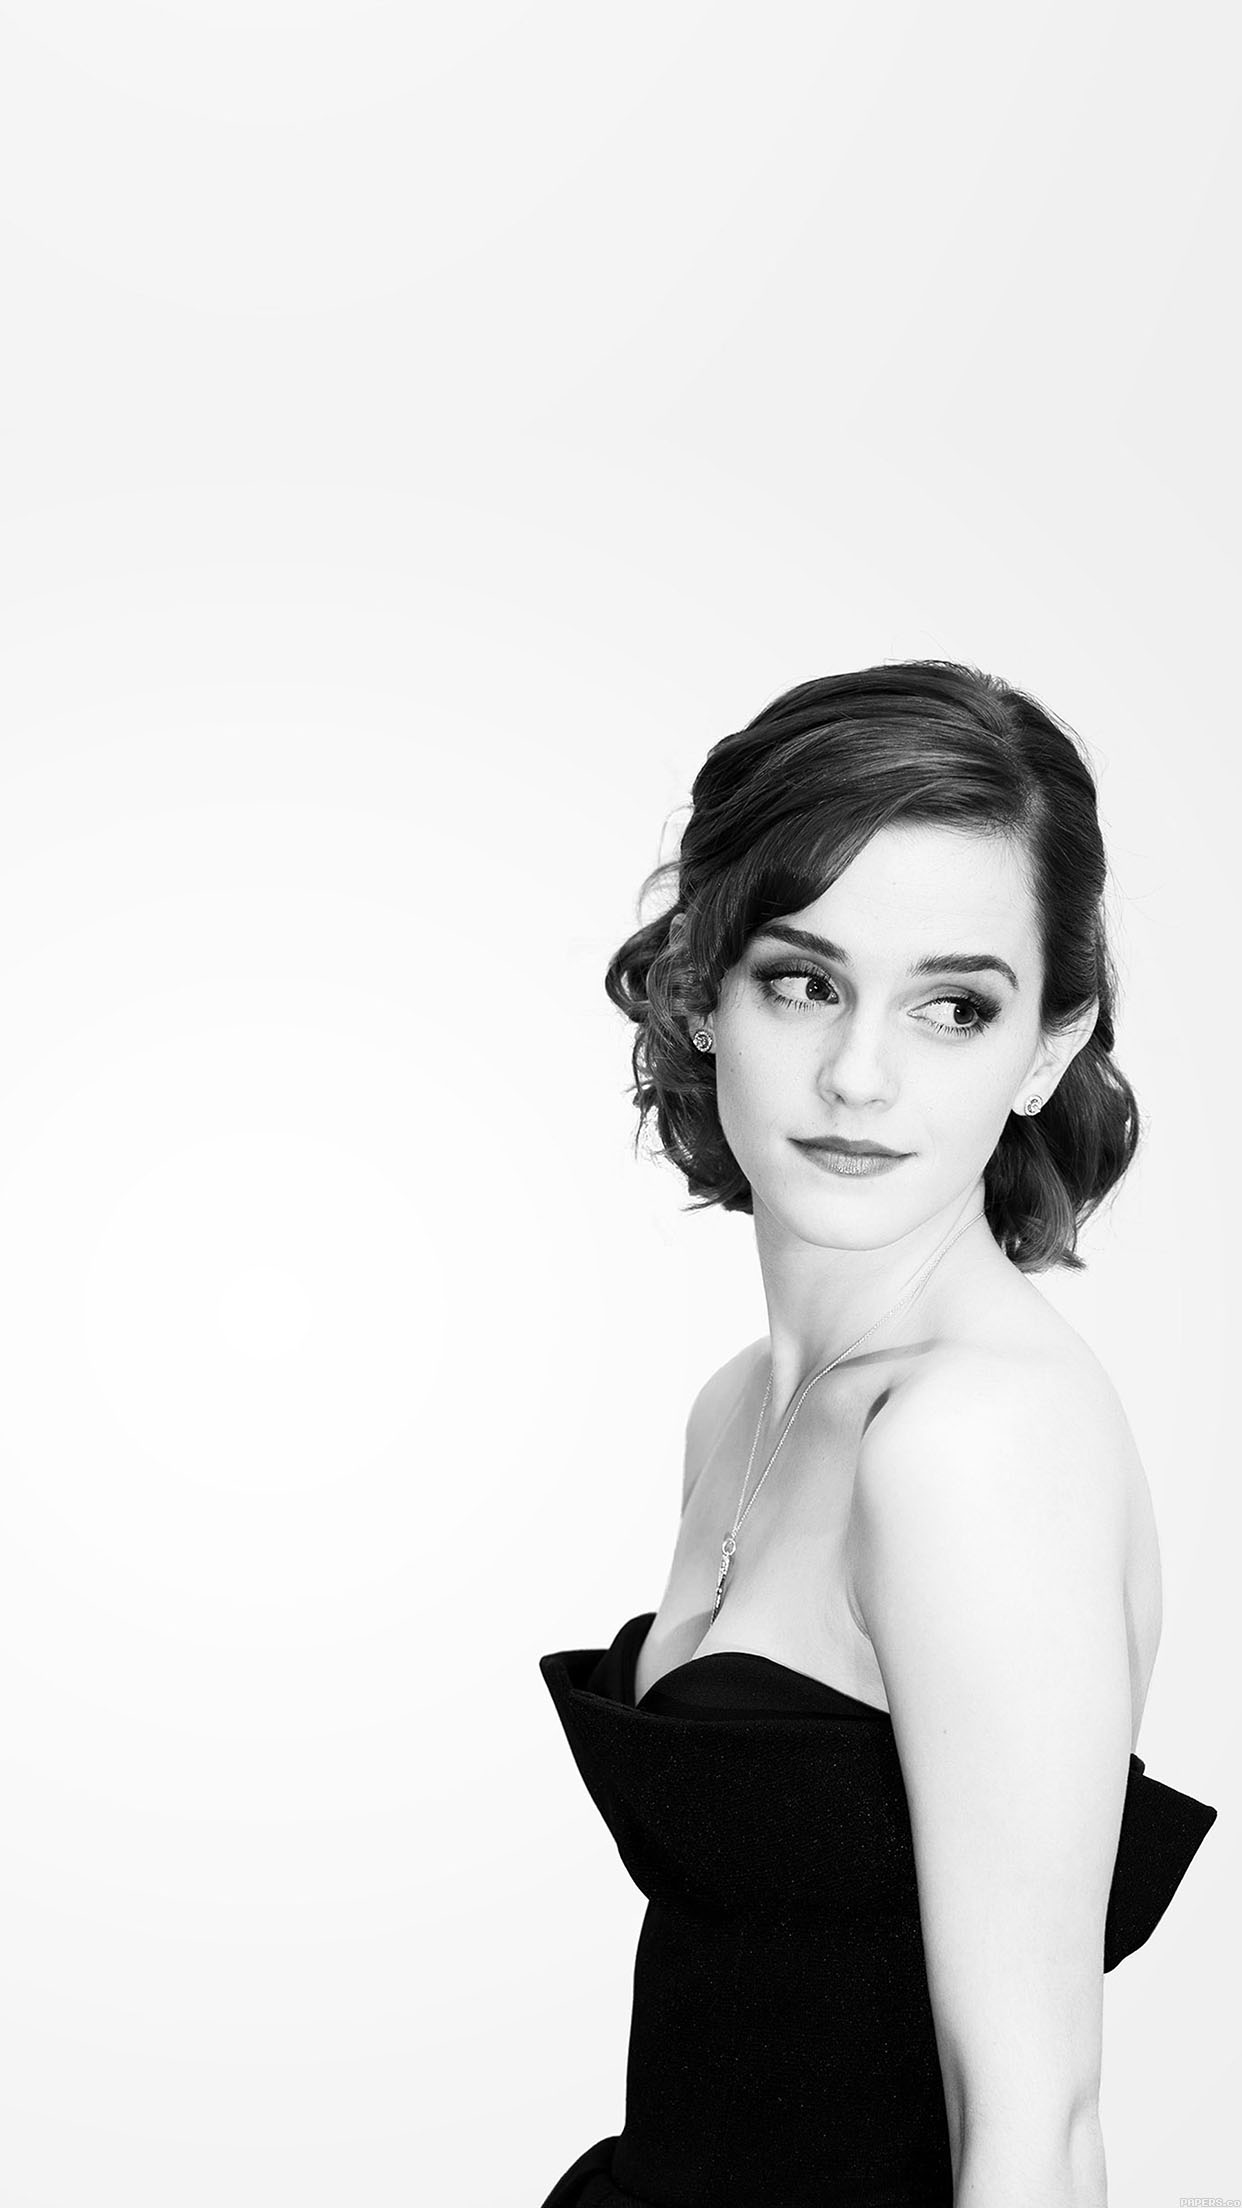 Watson Emma In Dress Beauty Girl Film Face Android wallpaper